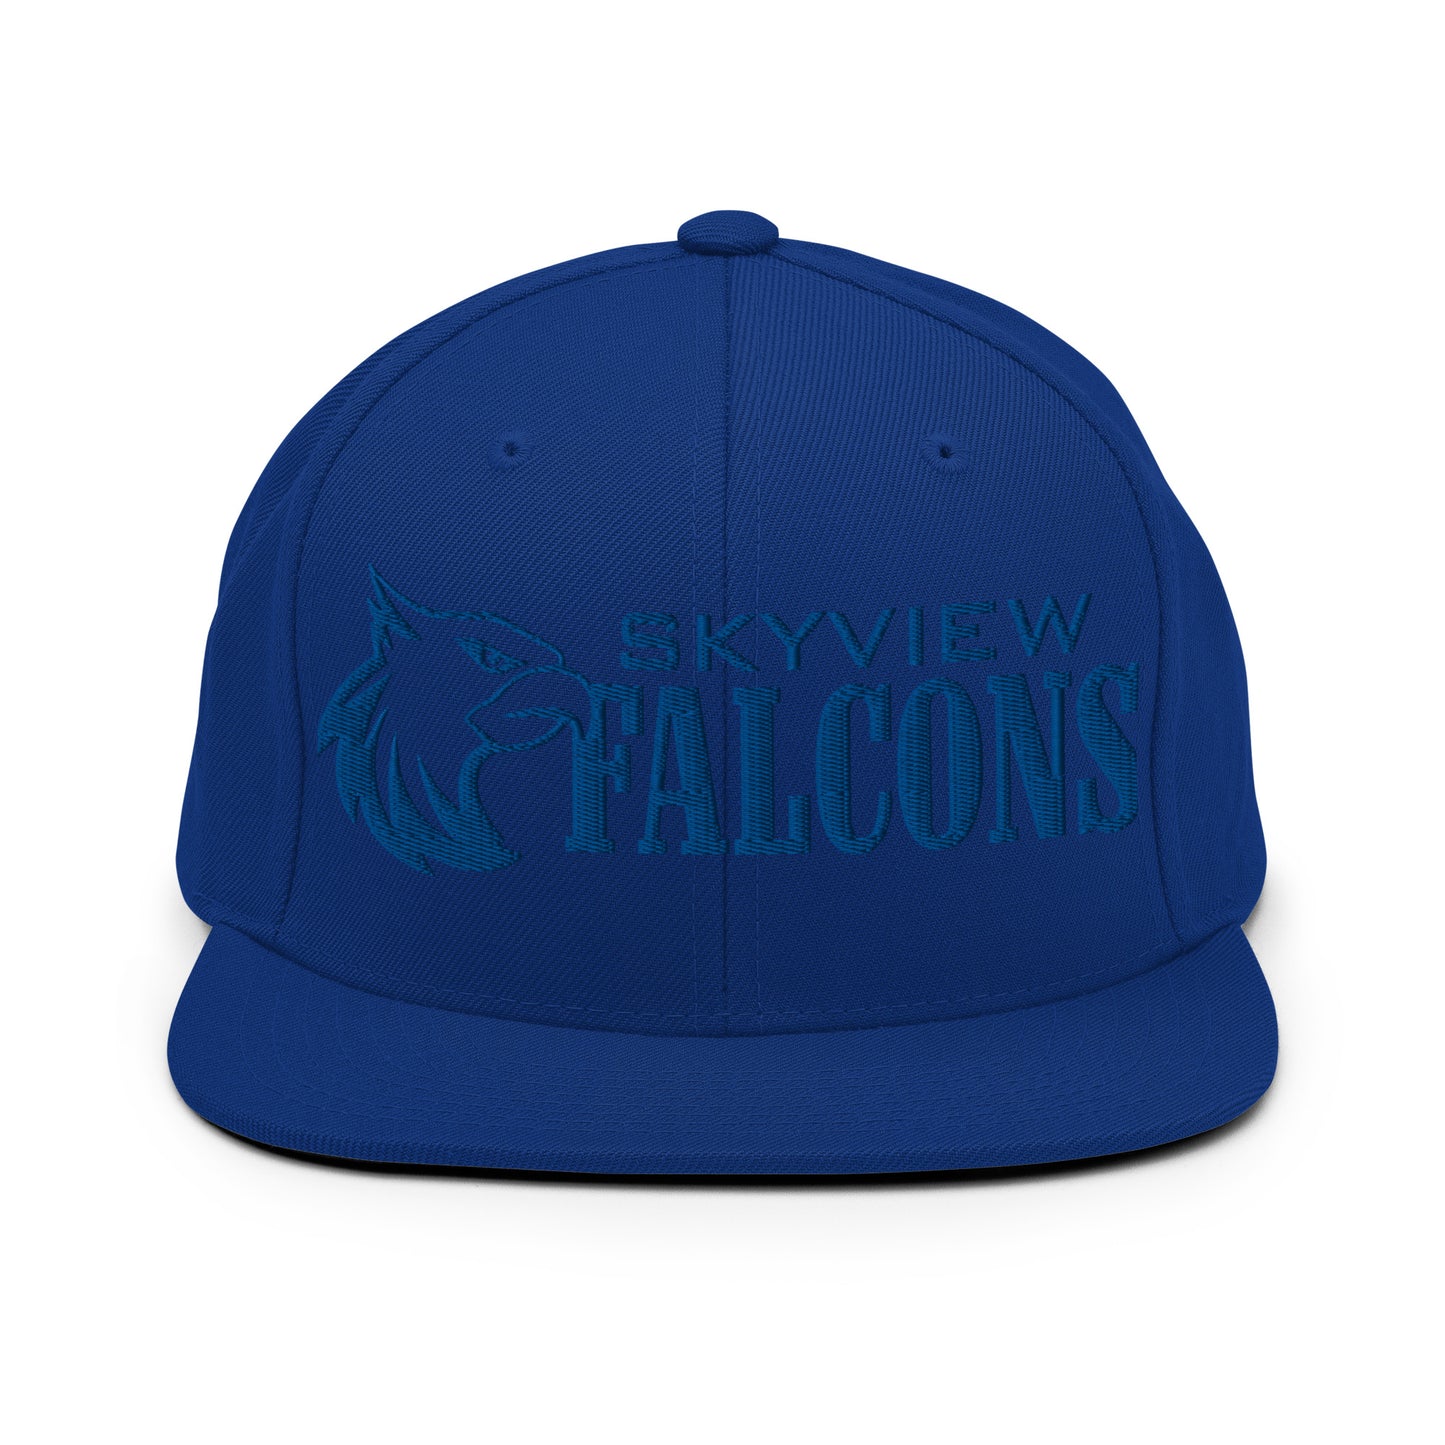 SHS Snapback Hat - Skyview Falcons